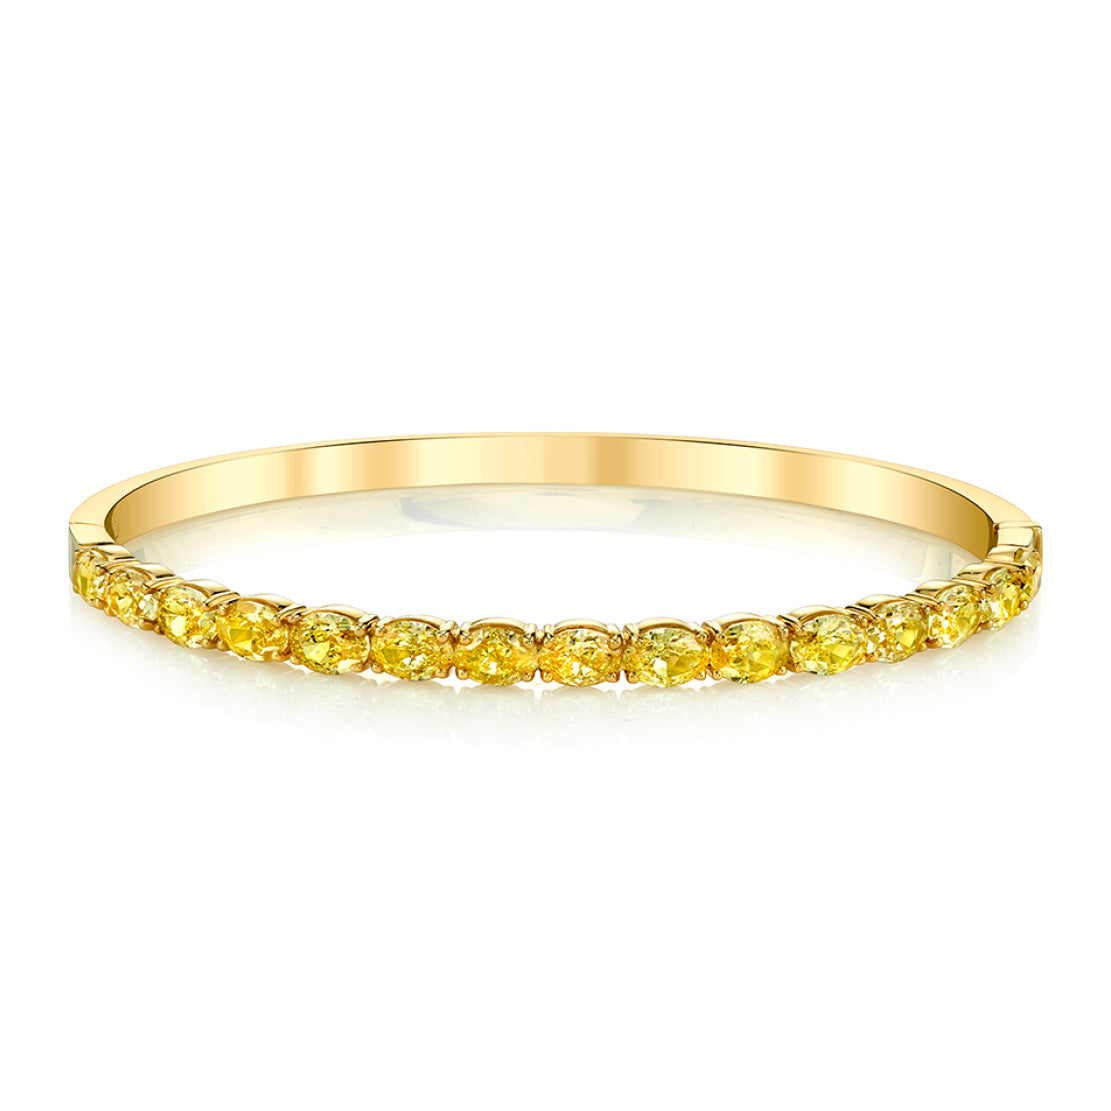 Oval Yellow Diamond Bracelet